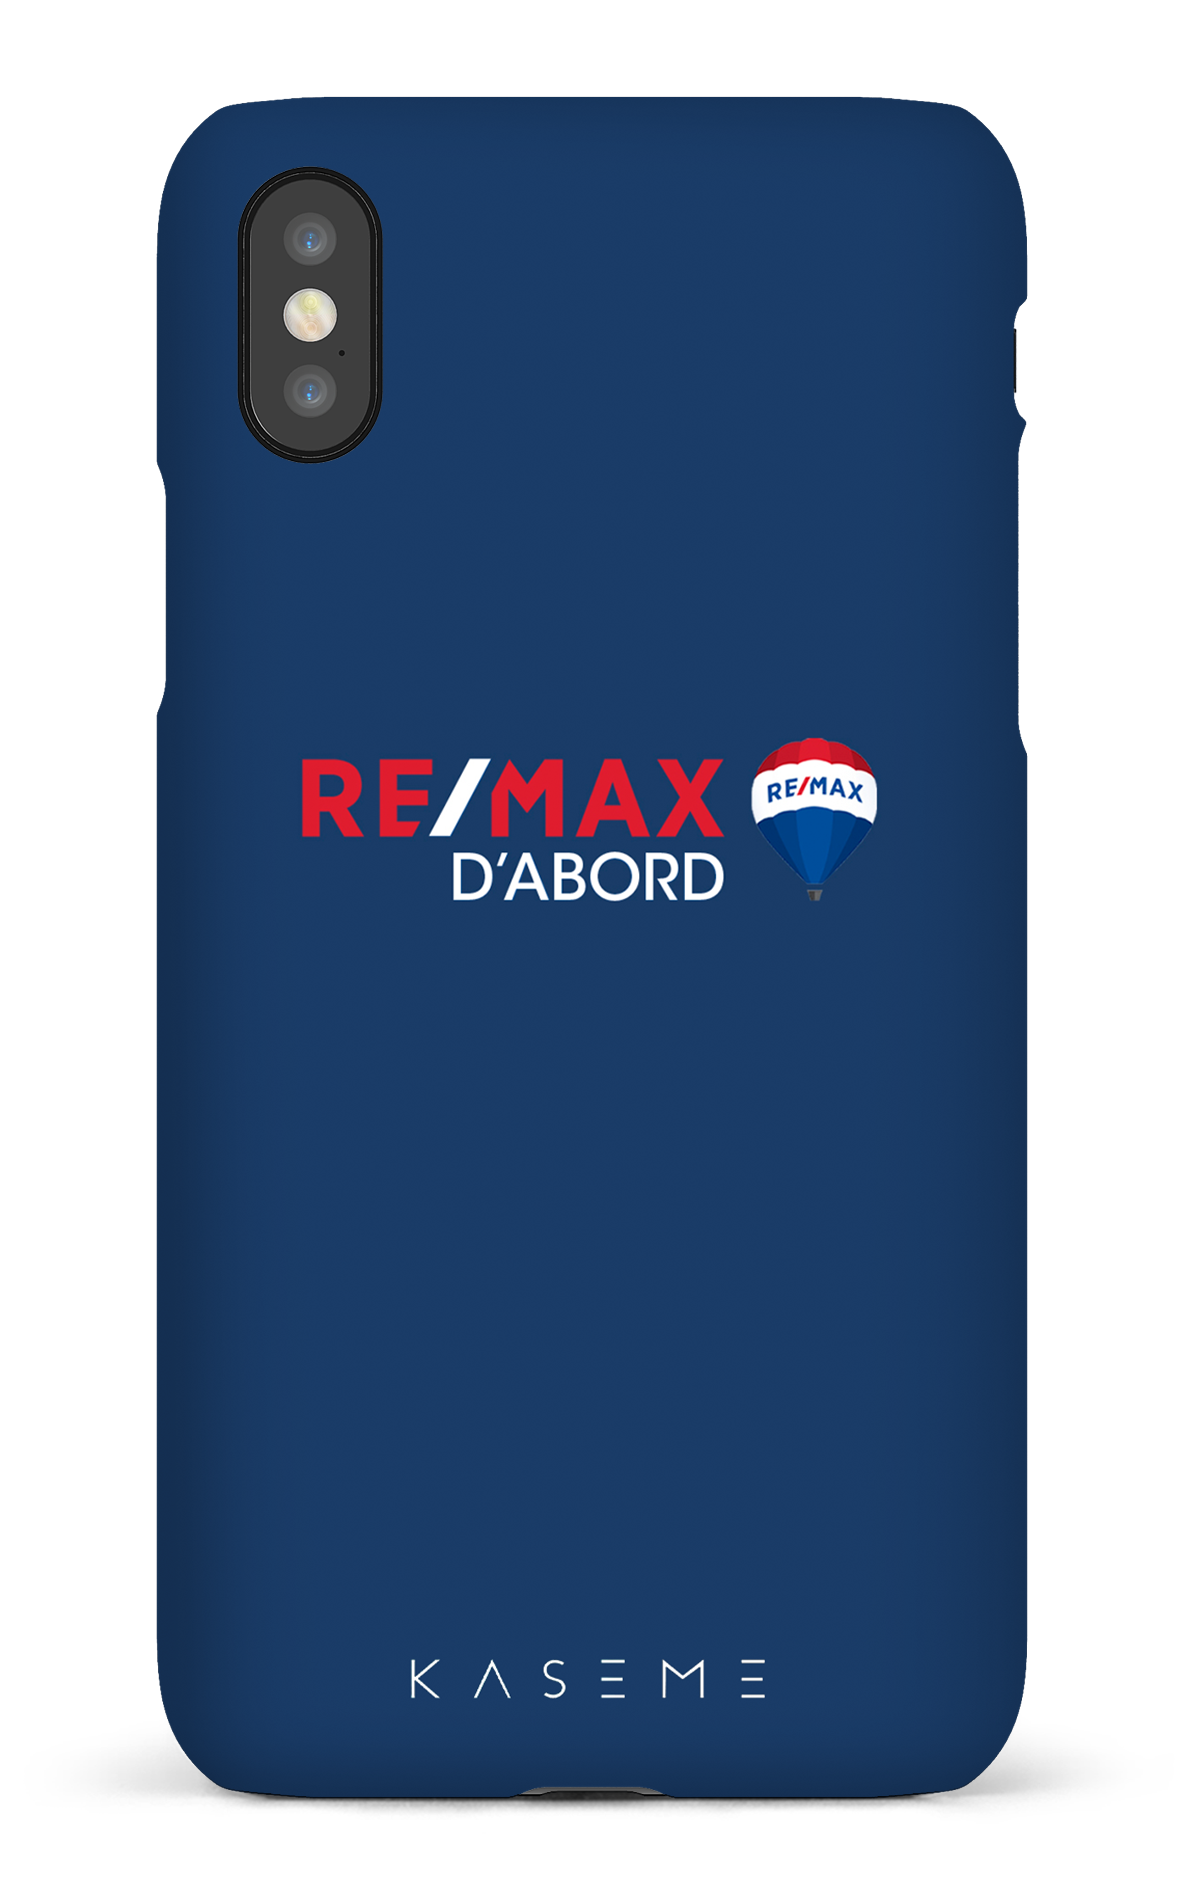 Remax D'abord Bleu - iPhone X/XS